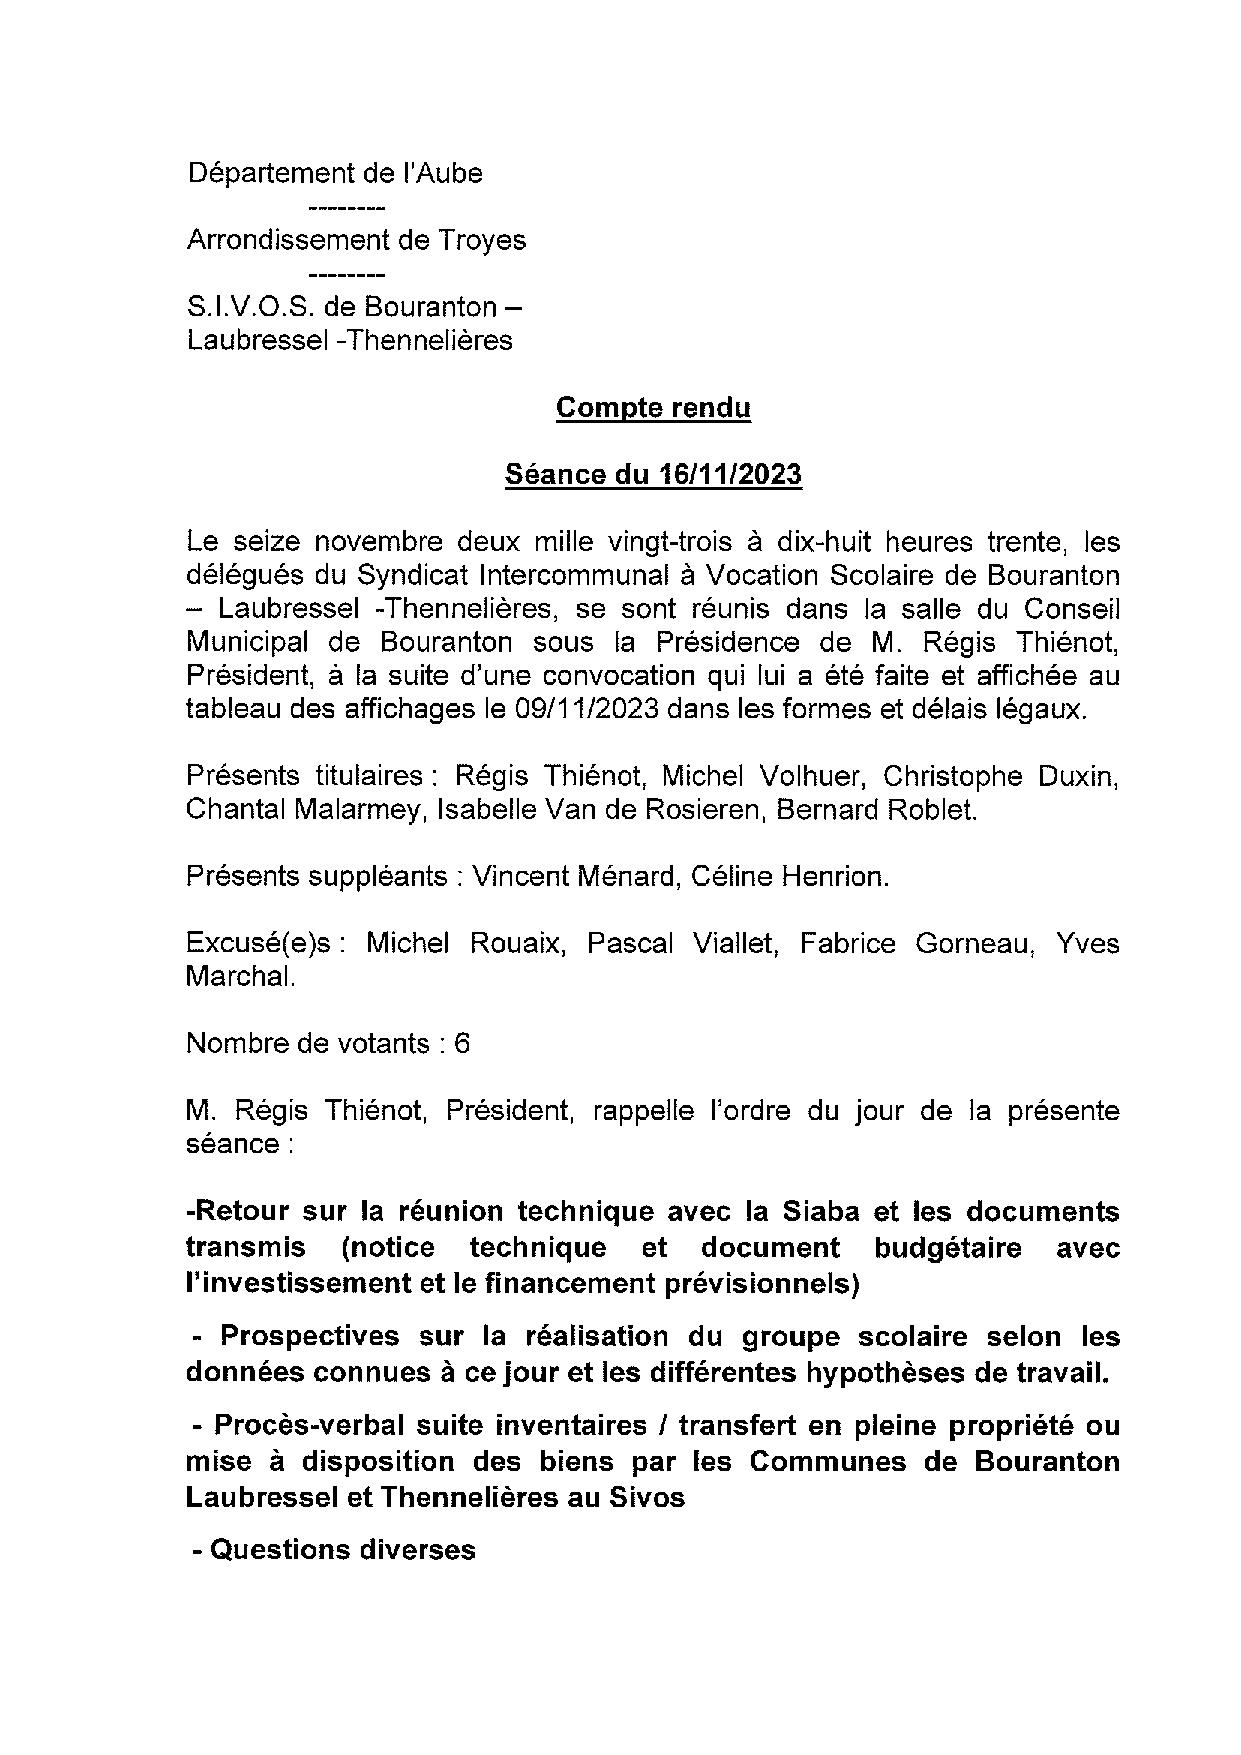 CR Réunion SIVOS du 16.11.2023-page-001.jpg